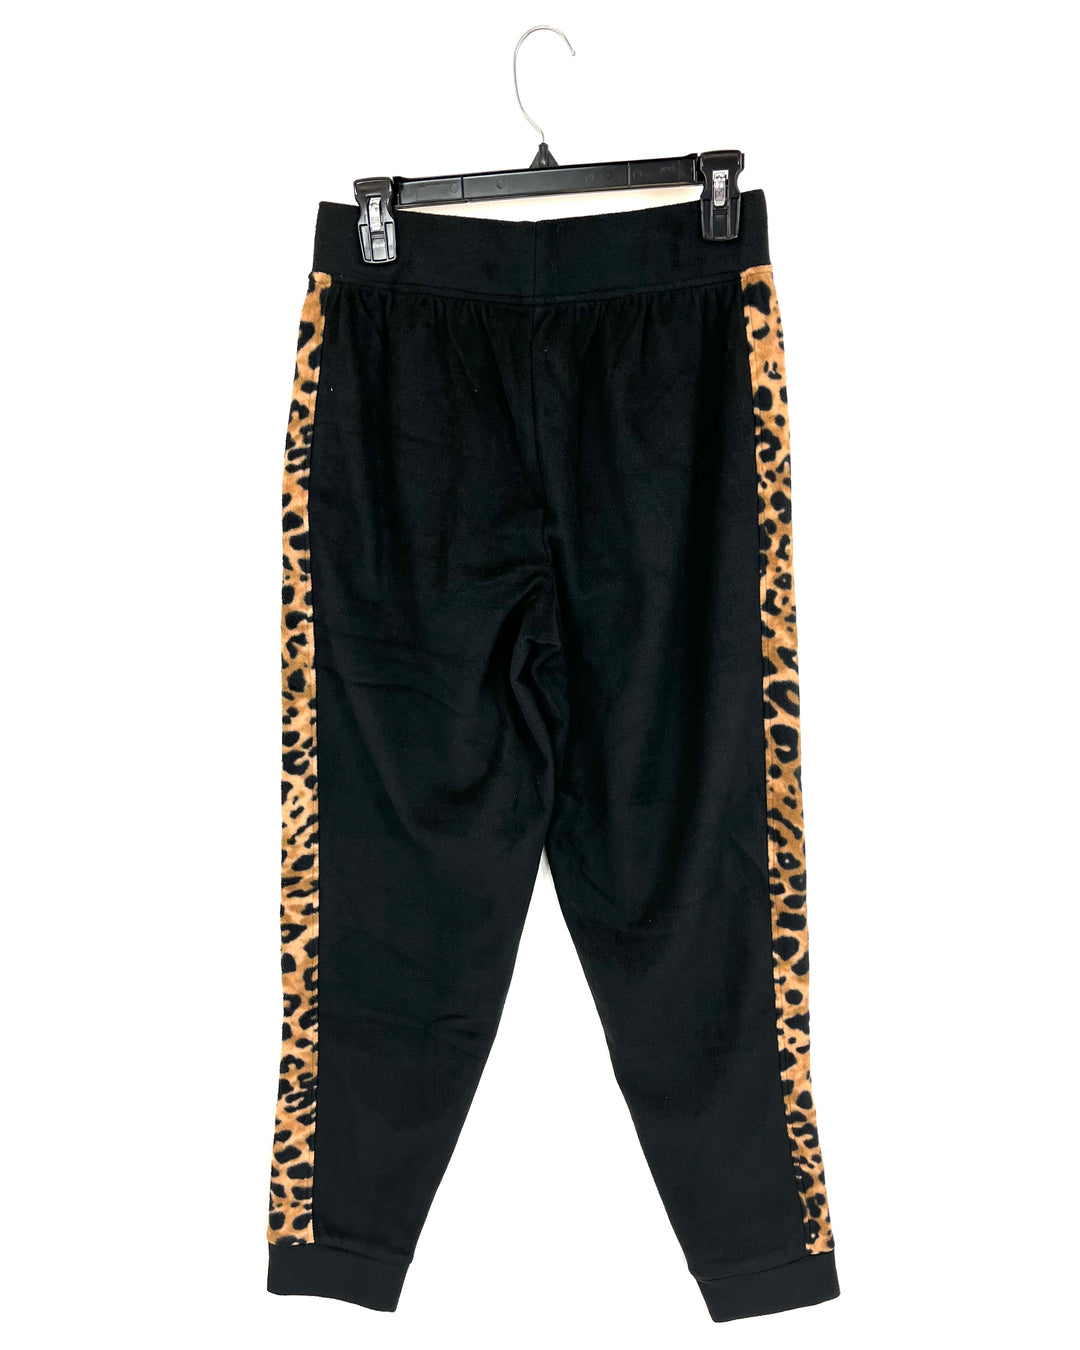 Black and Leopard Fleece Jogger Pants - Size 2/4